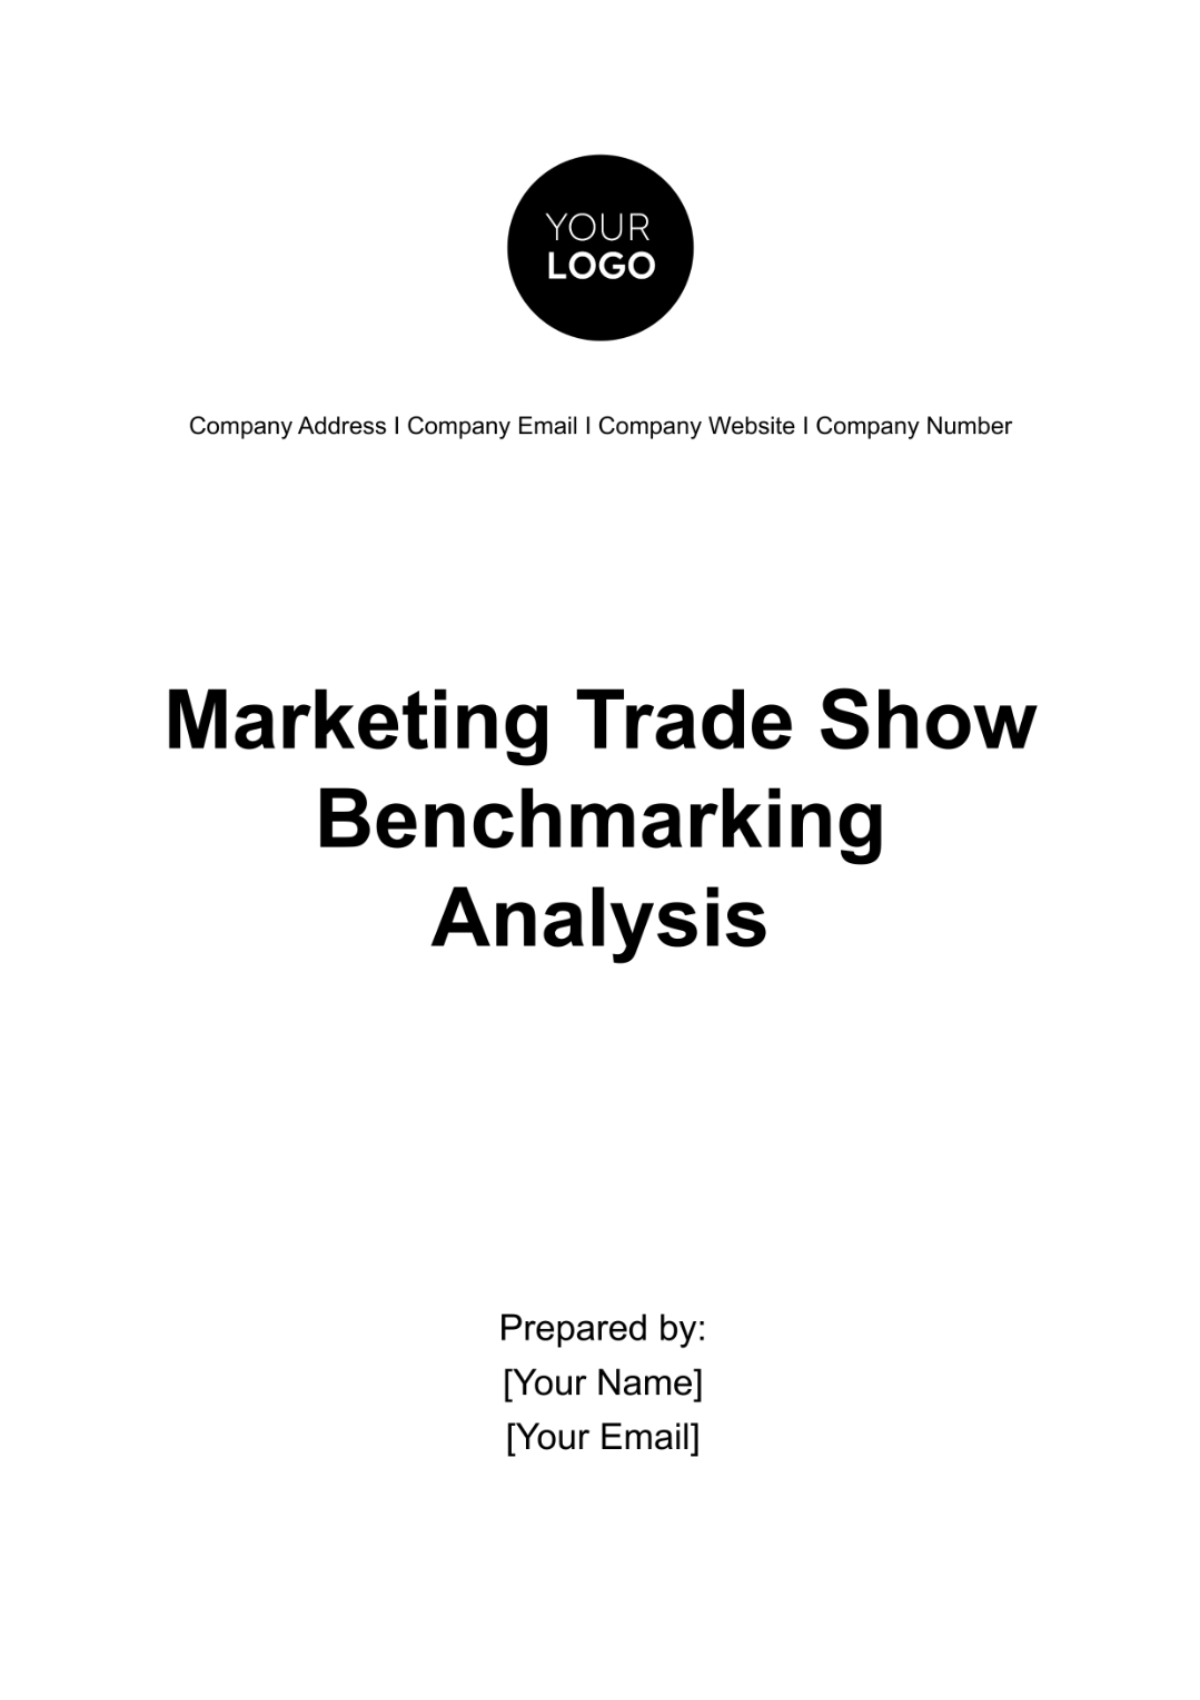 Marketing Trade Show Benchmarking Analysis Template